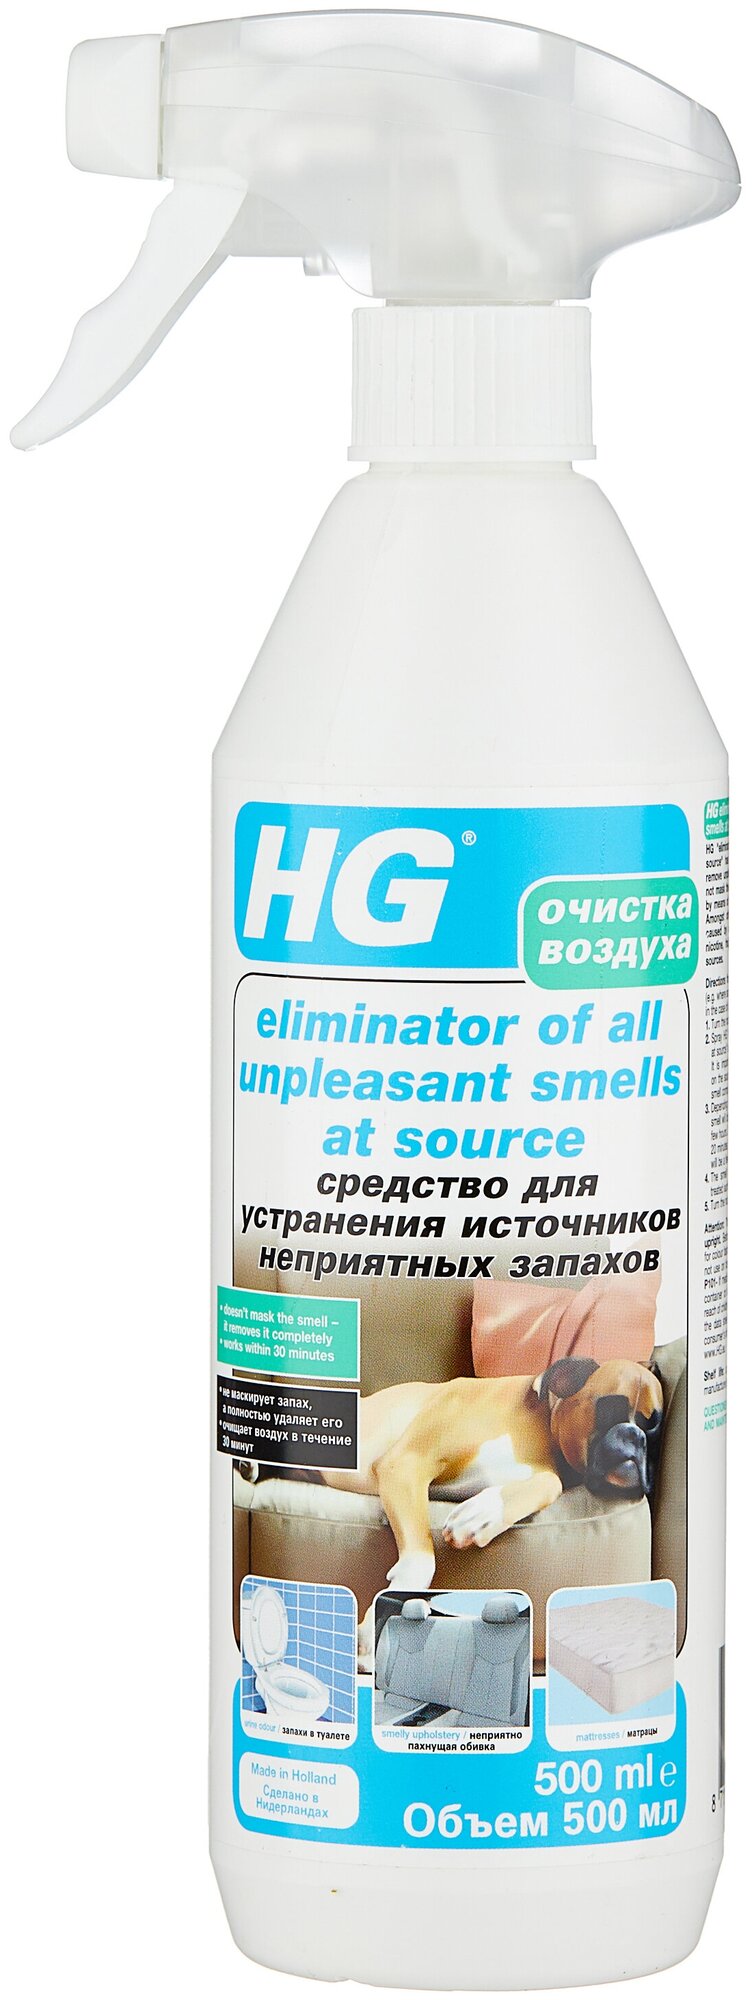 Средство HG Для устранения источников неприятного запаха 500 мл - фото №1